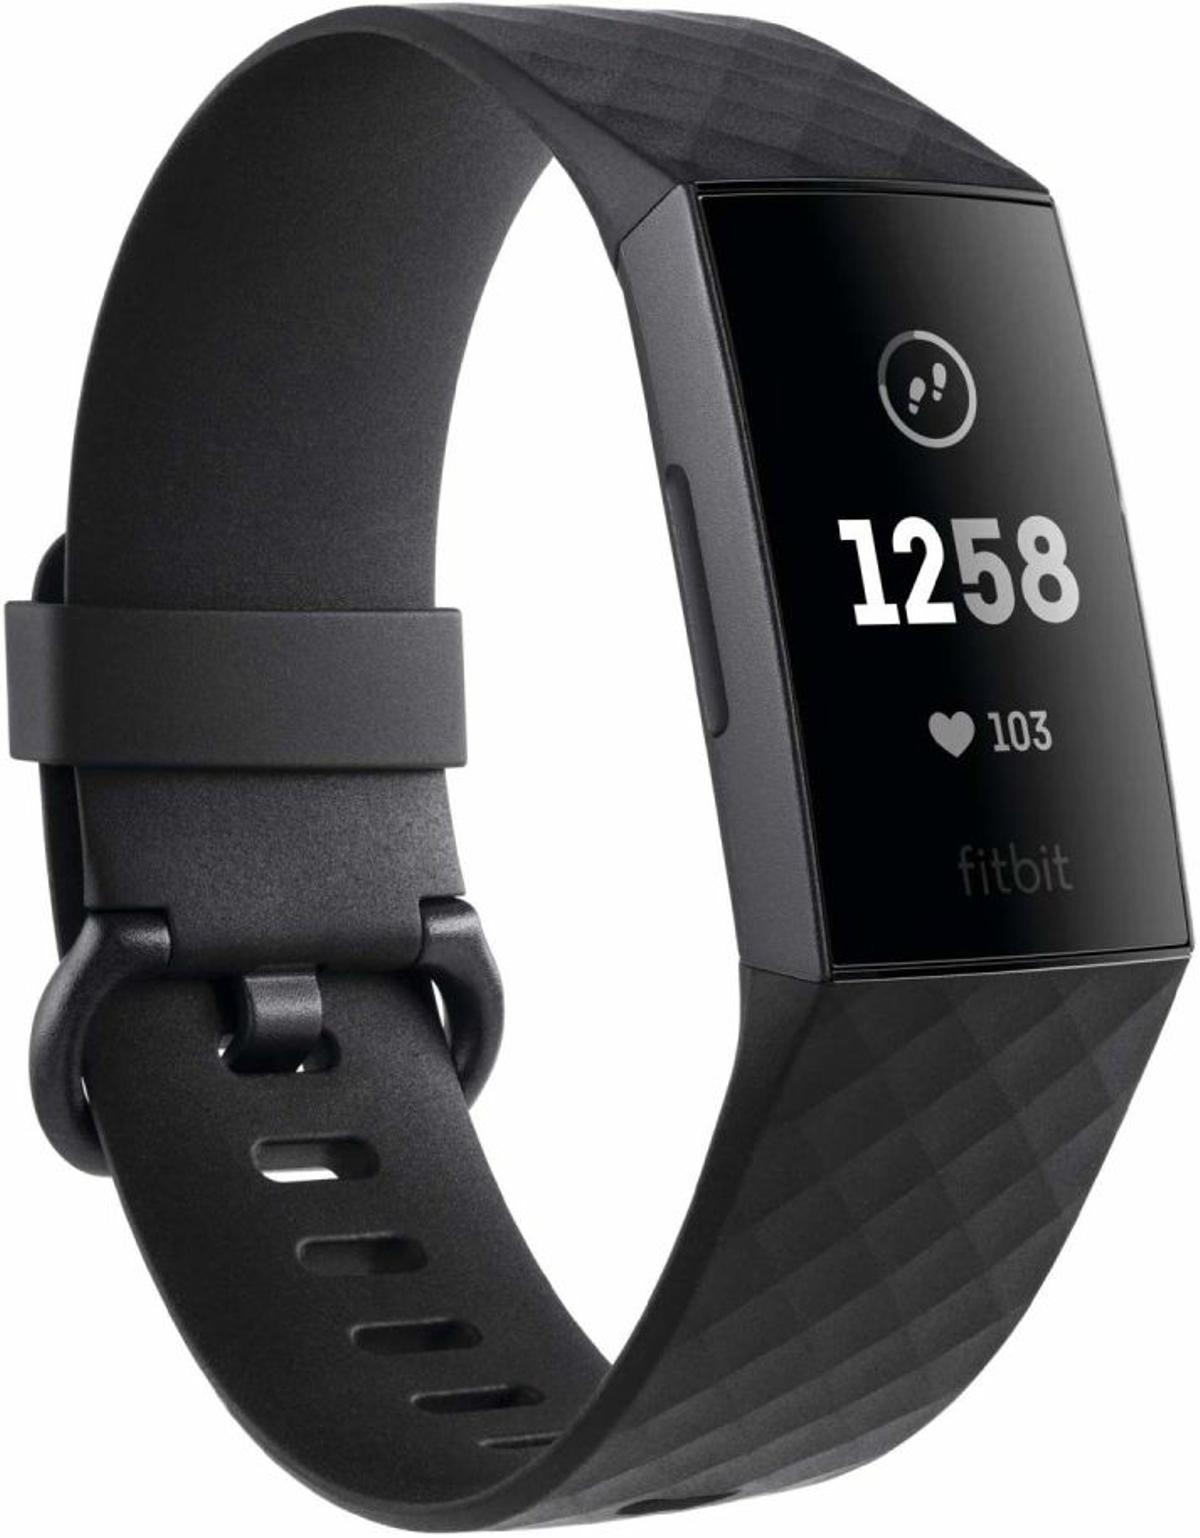 Fitbit Charge 3 pulsera de actividad física